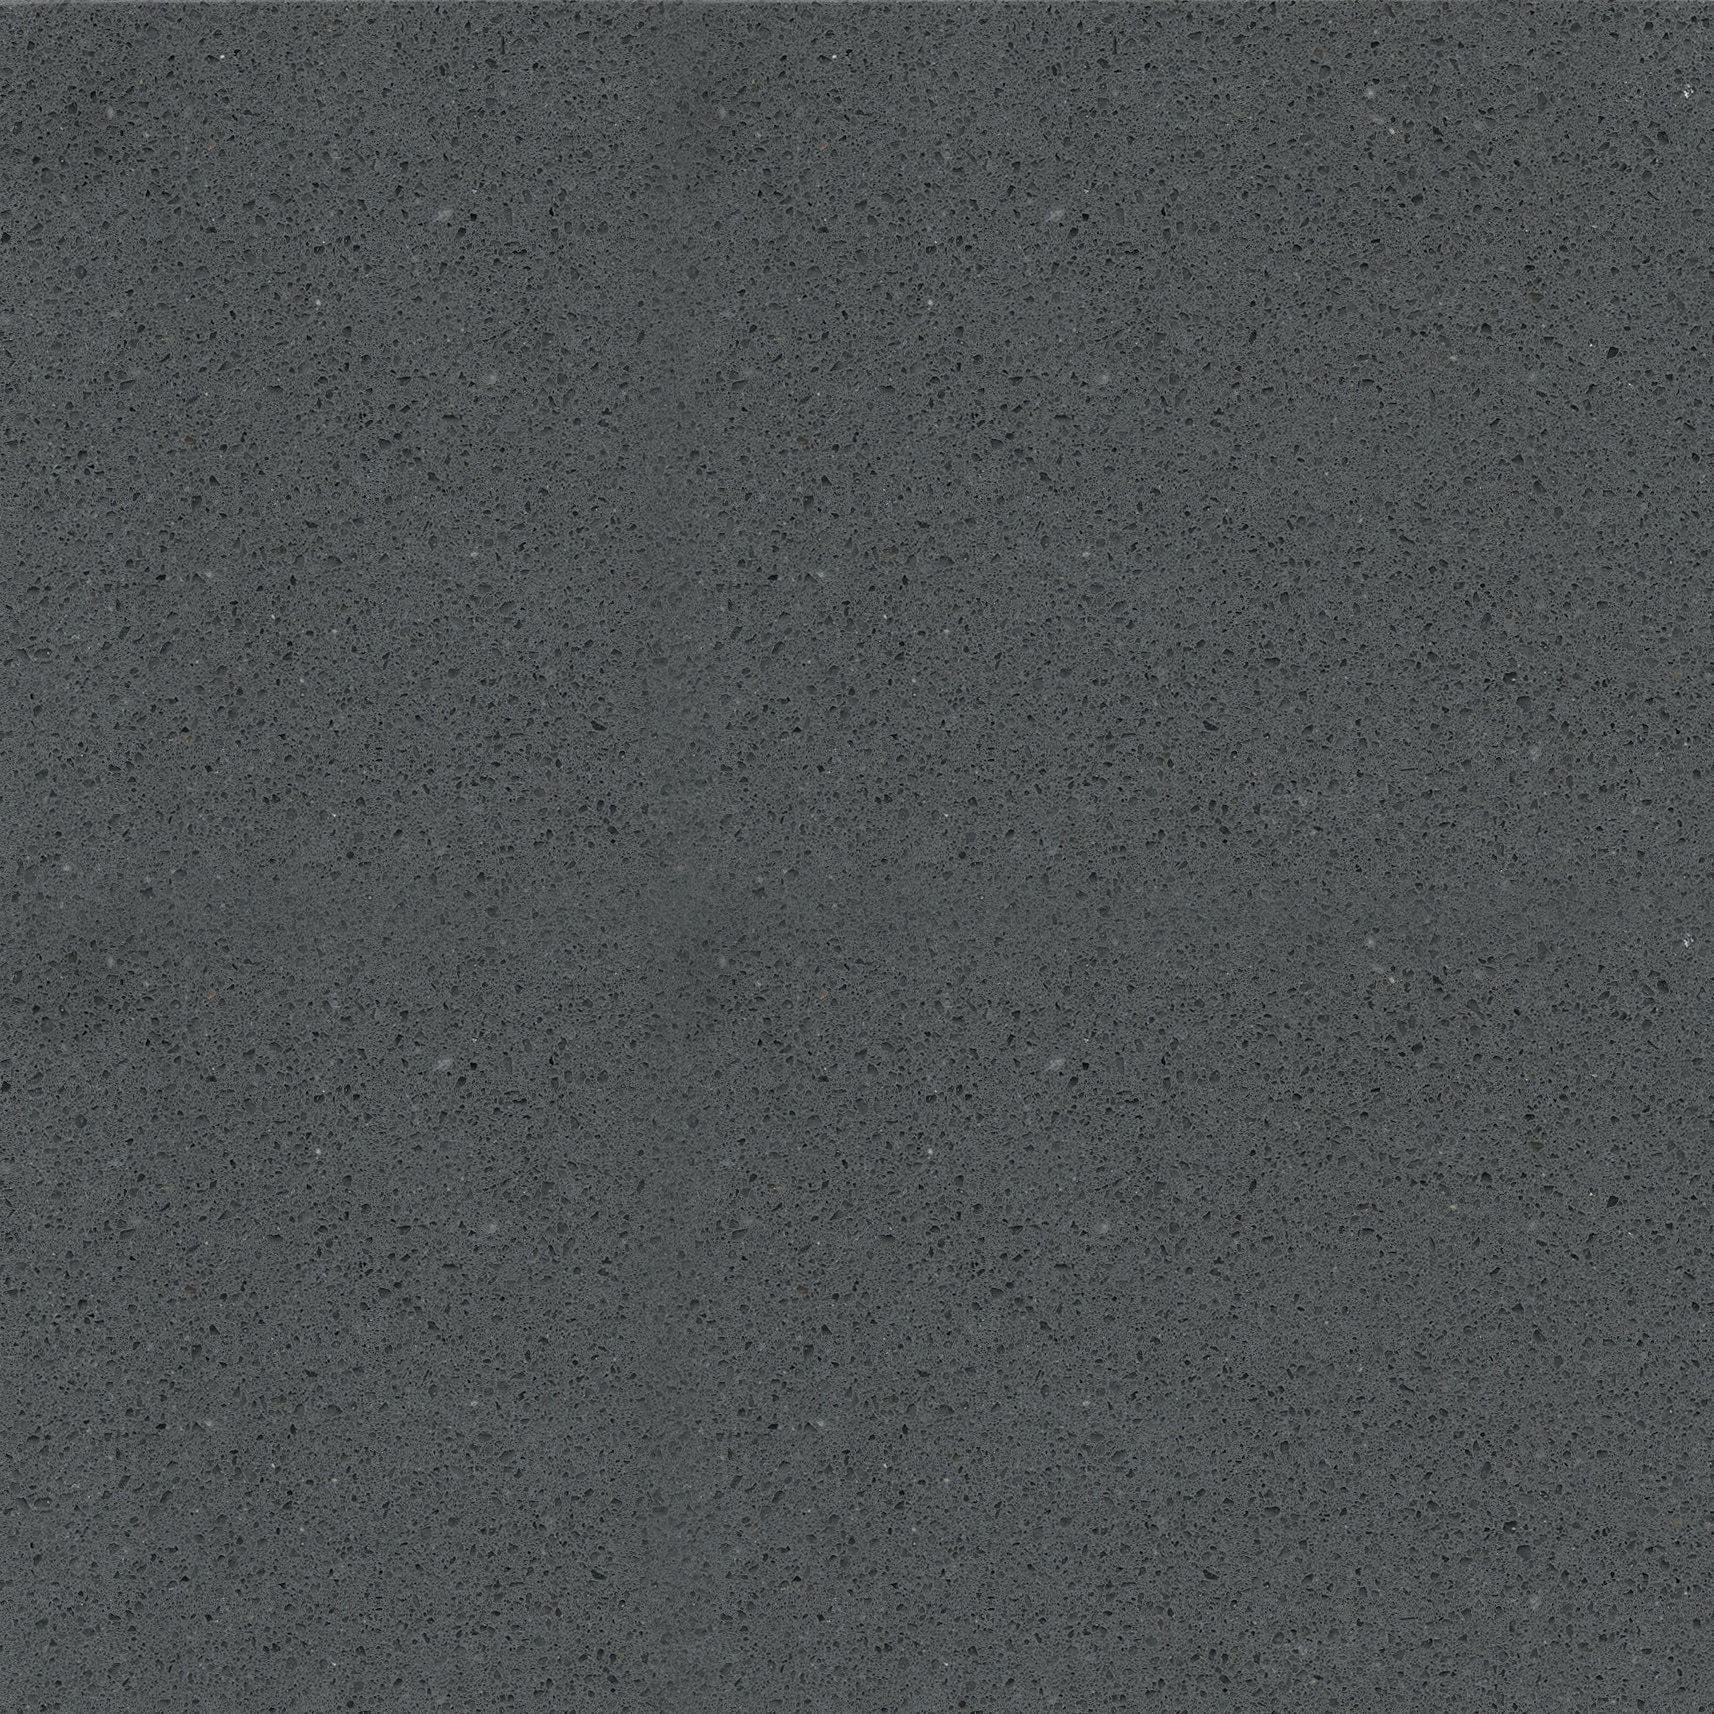 Marengo/Polished Quartz Gray Kitchen Countertop SAMPLE (4-in x 6-in) | - Silestone 263451